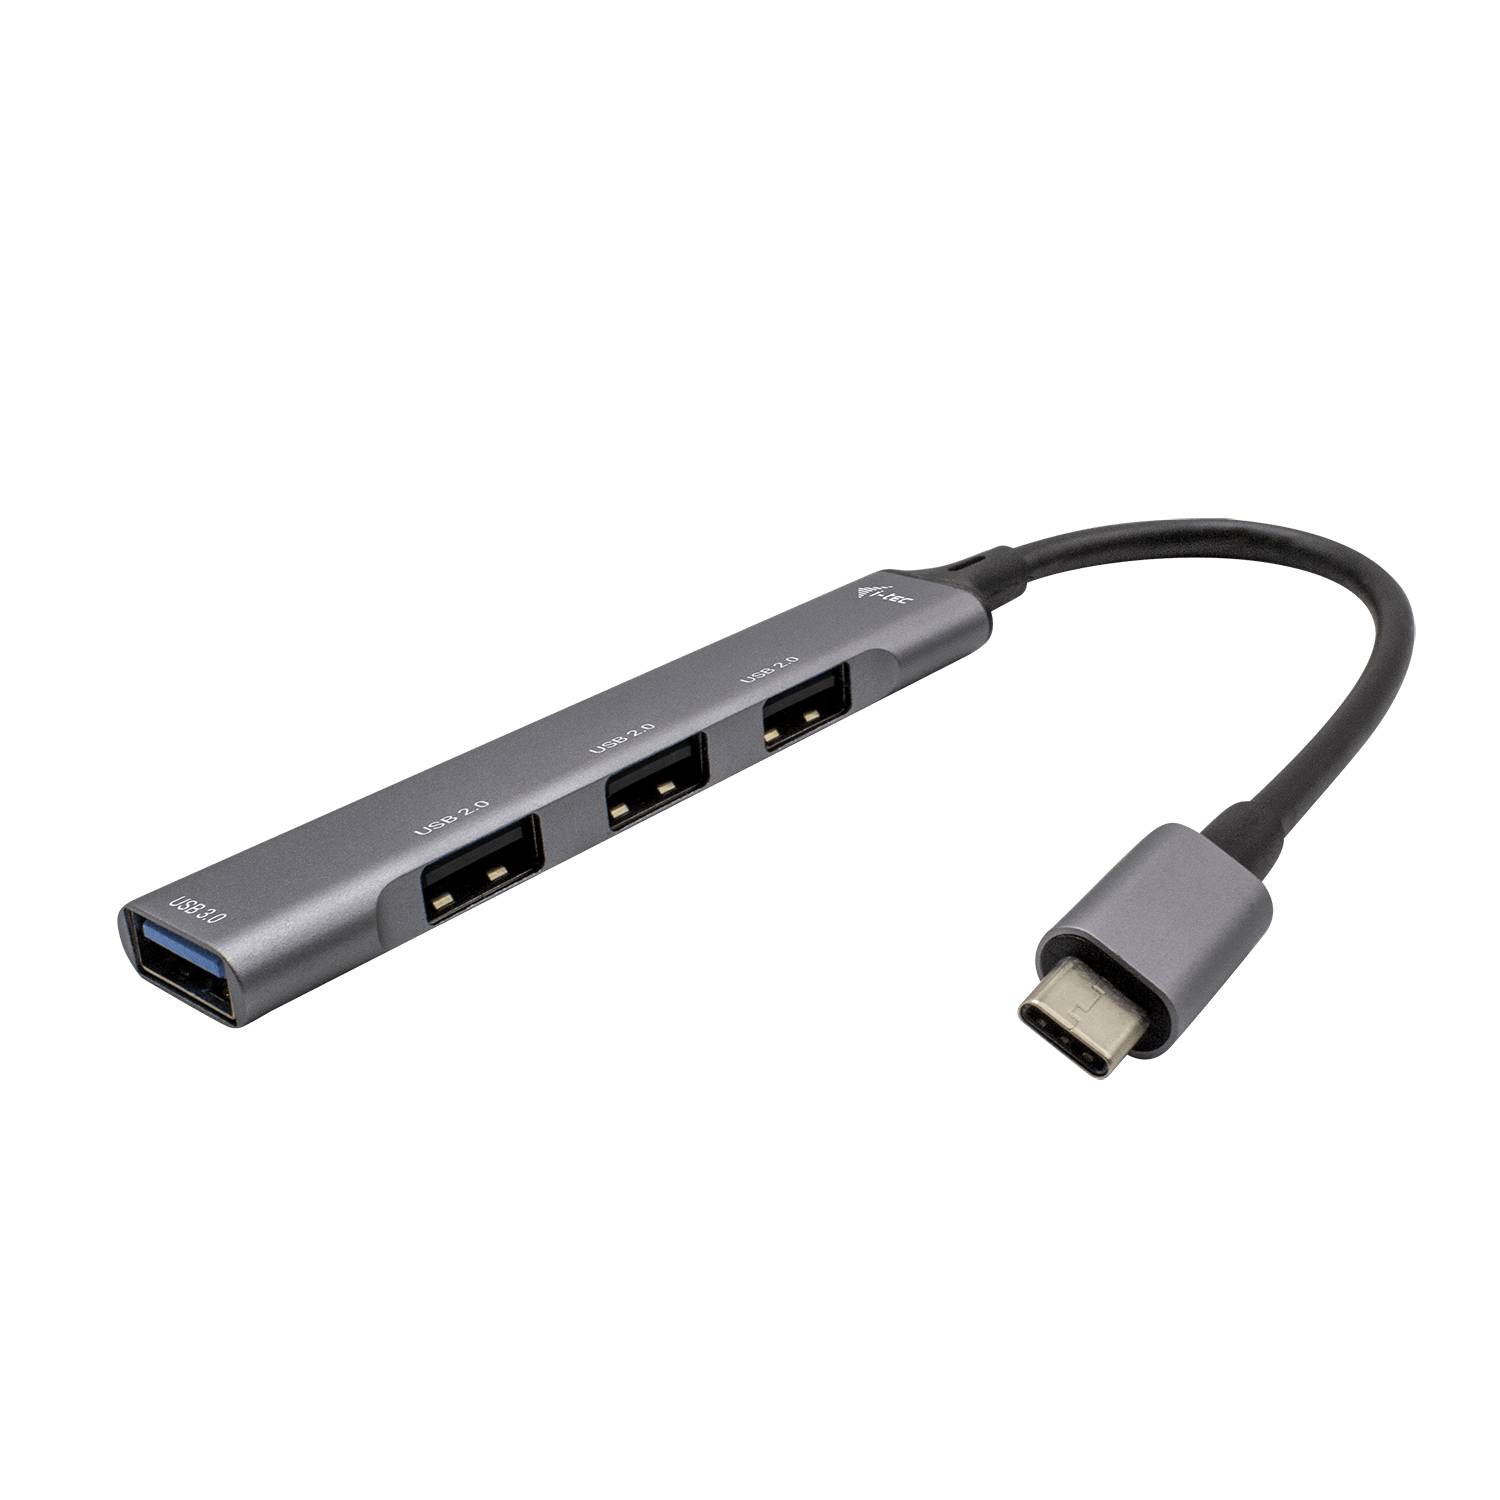 Rca Informatique - Image du produit : USB-C METAL HUB 1X USB 3.0 + 3X USB 2.0